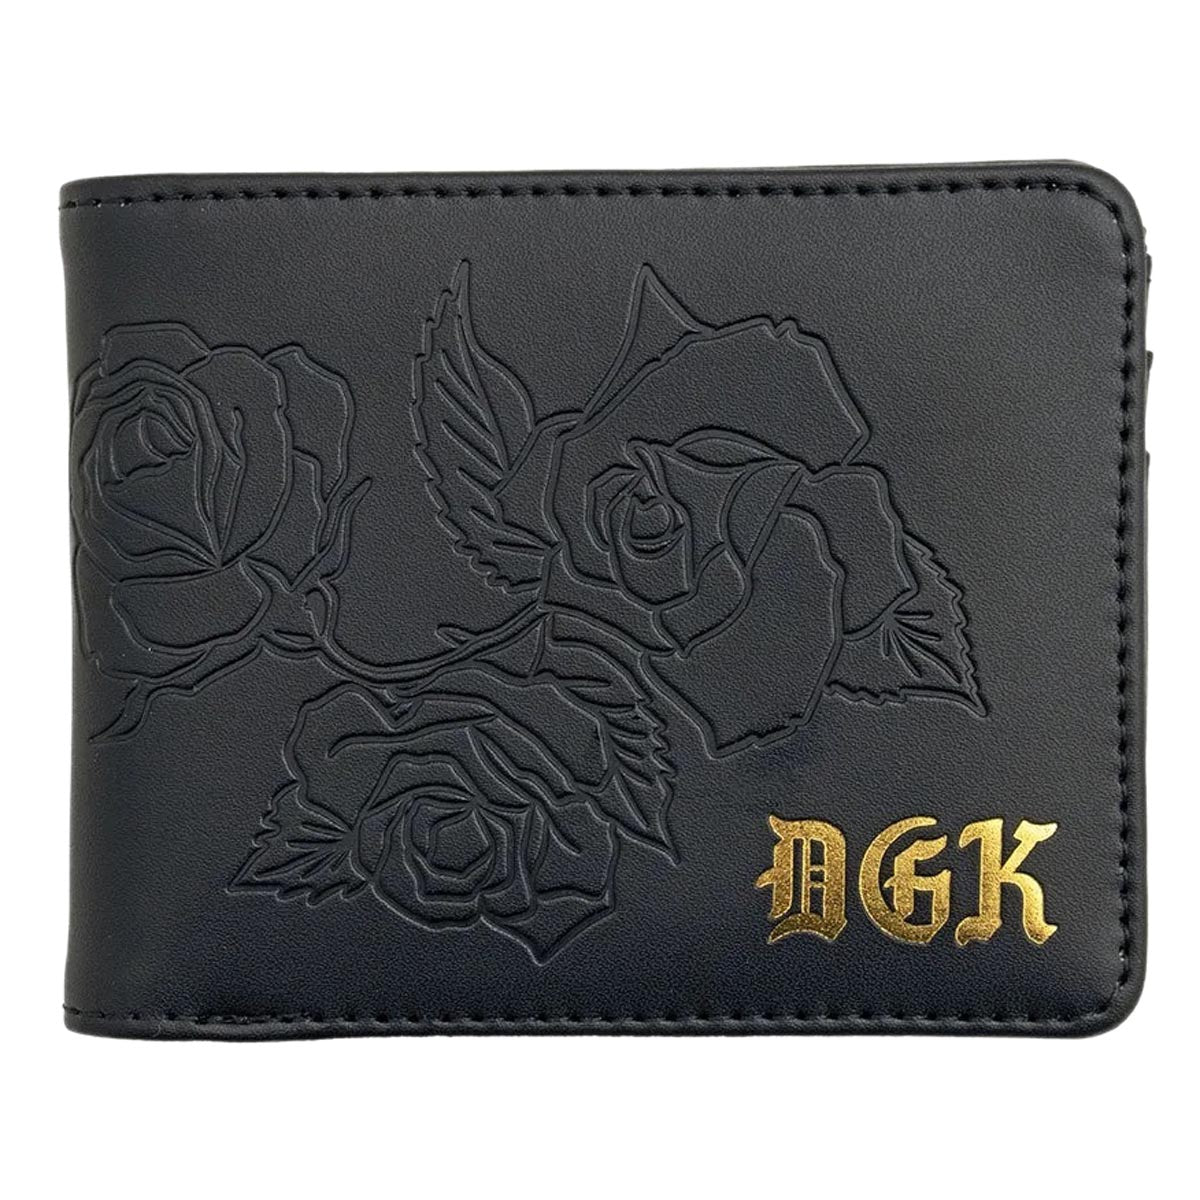 DGK Boulevard Wallet - Black image 1